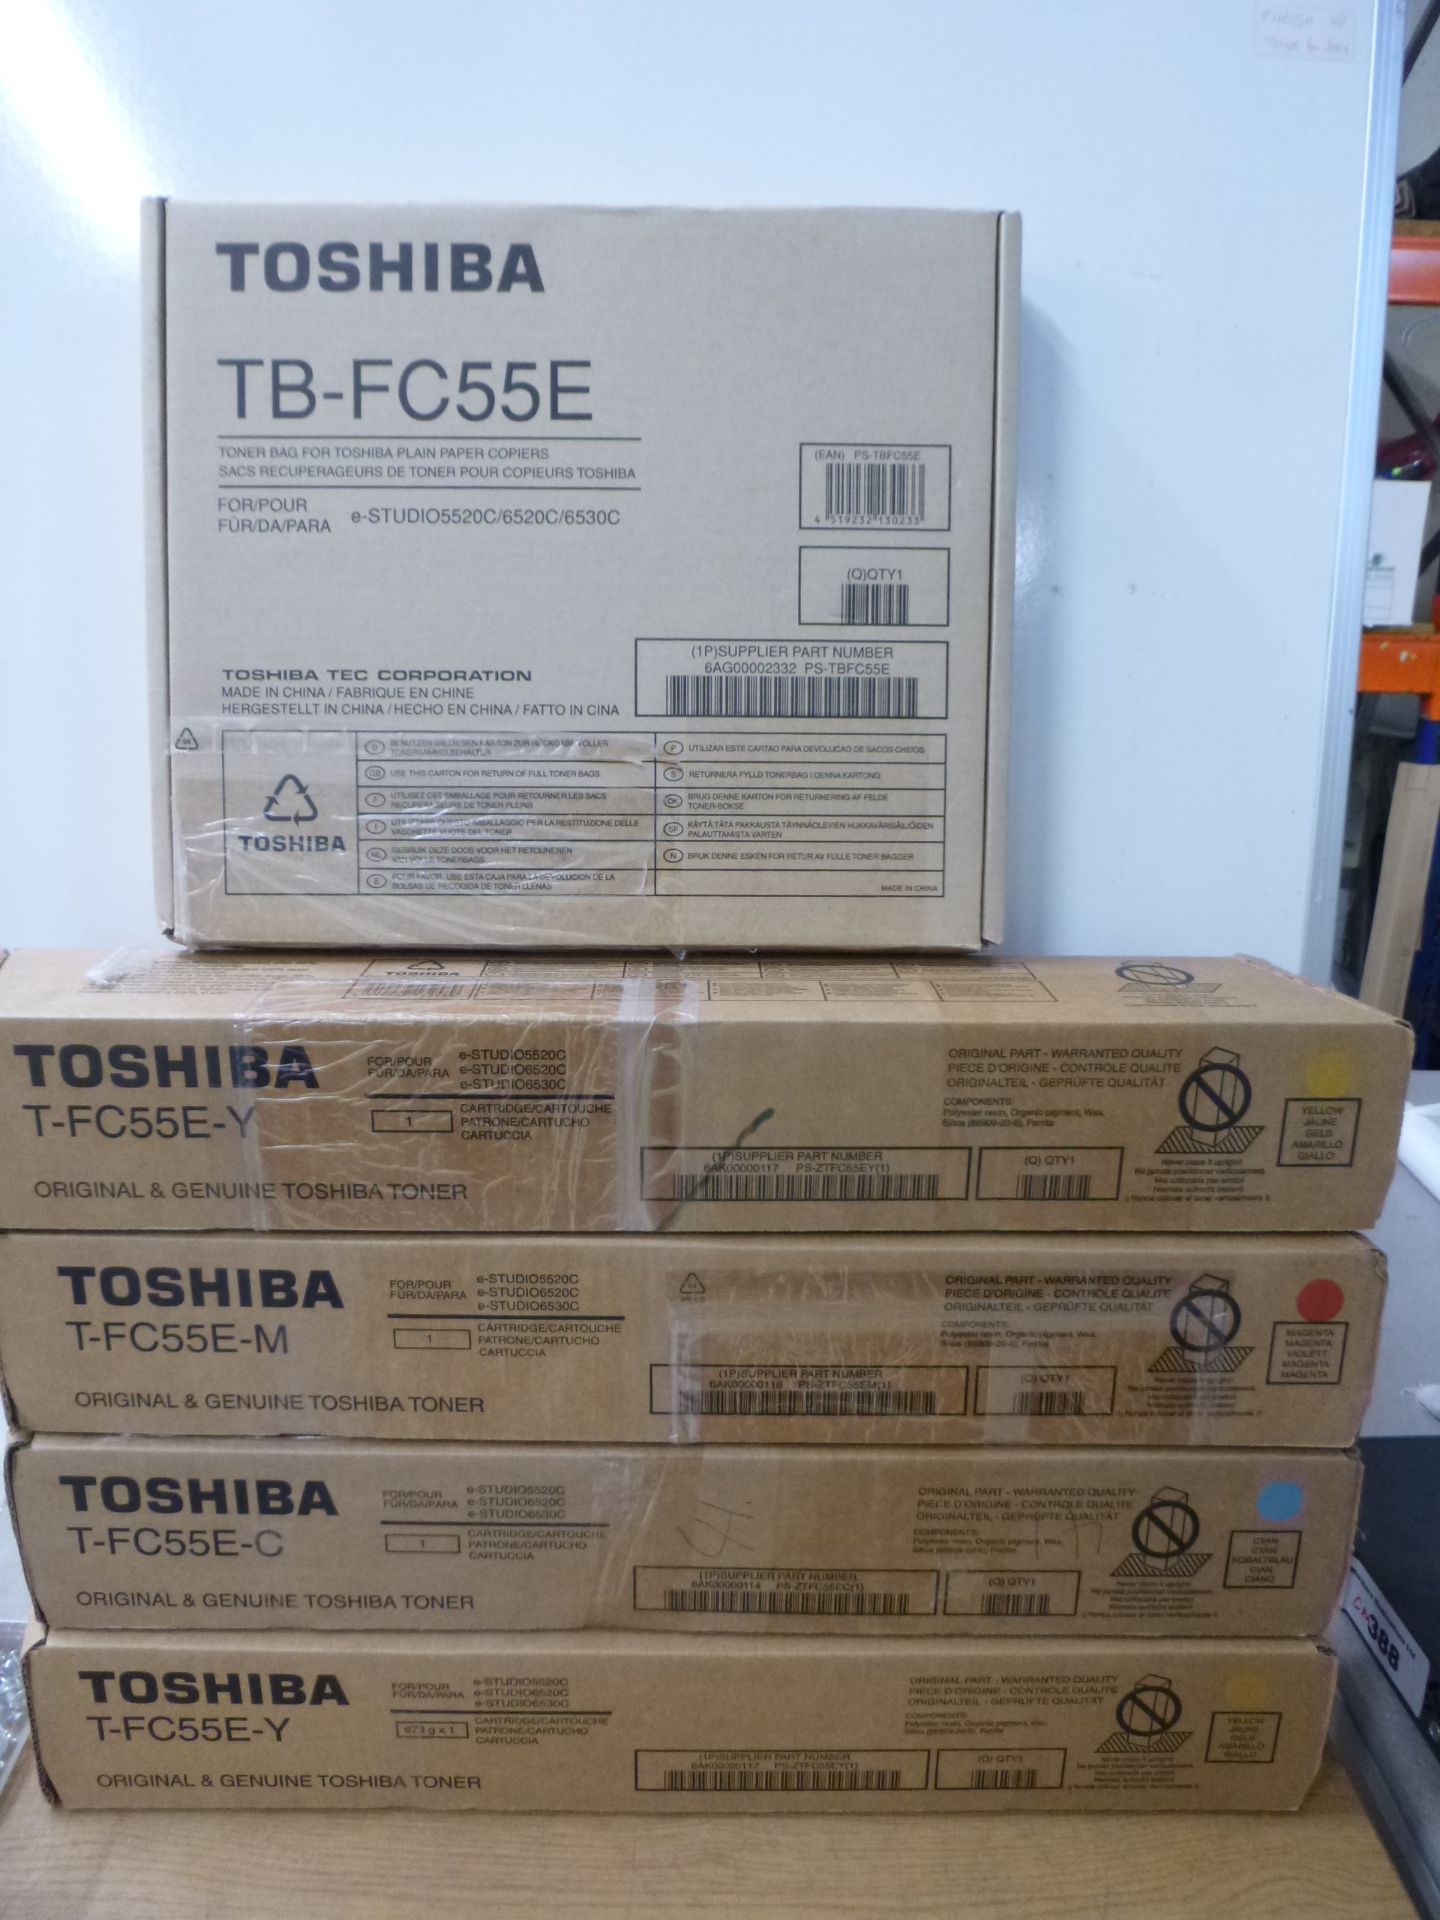 TOSHIBA 4 X GENUINE ORIGINAL TONER CARTRIDGES FOR e-STUDIO 5520C/6520C/6530C (2 X YELLOW, 1 X CYAN 1